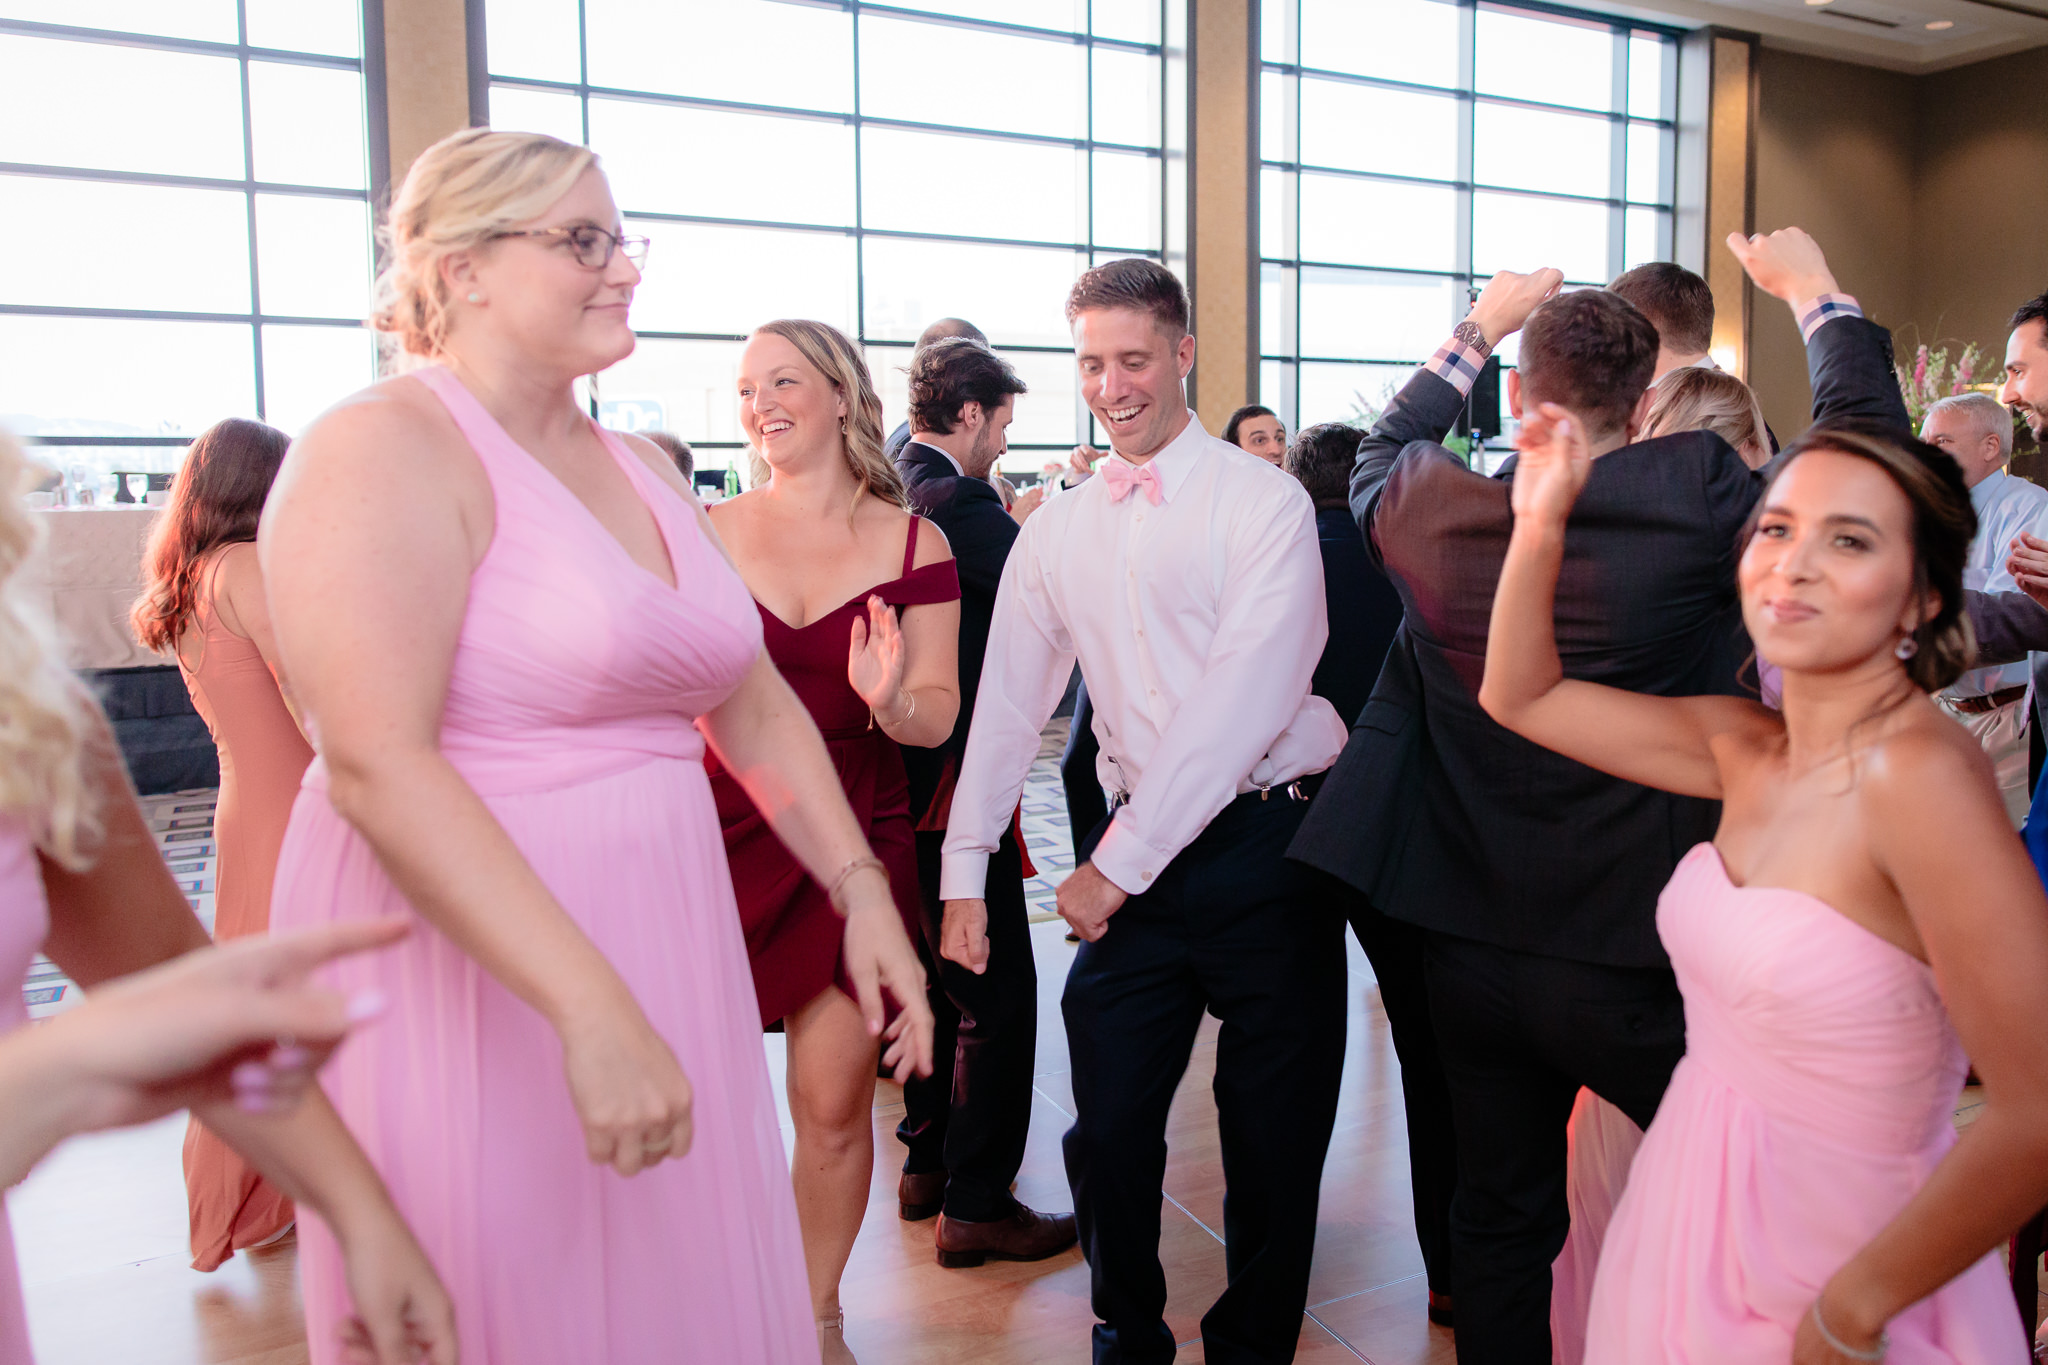 Bridal party dances at a wedding reception at Duquesne University